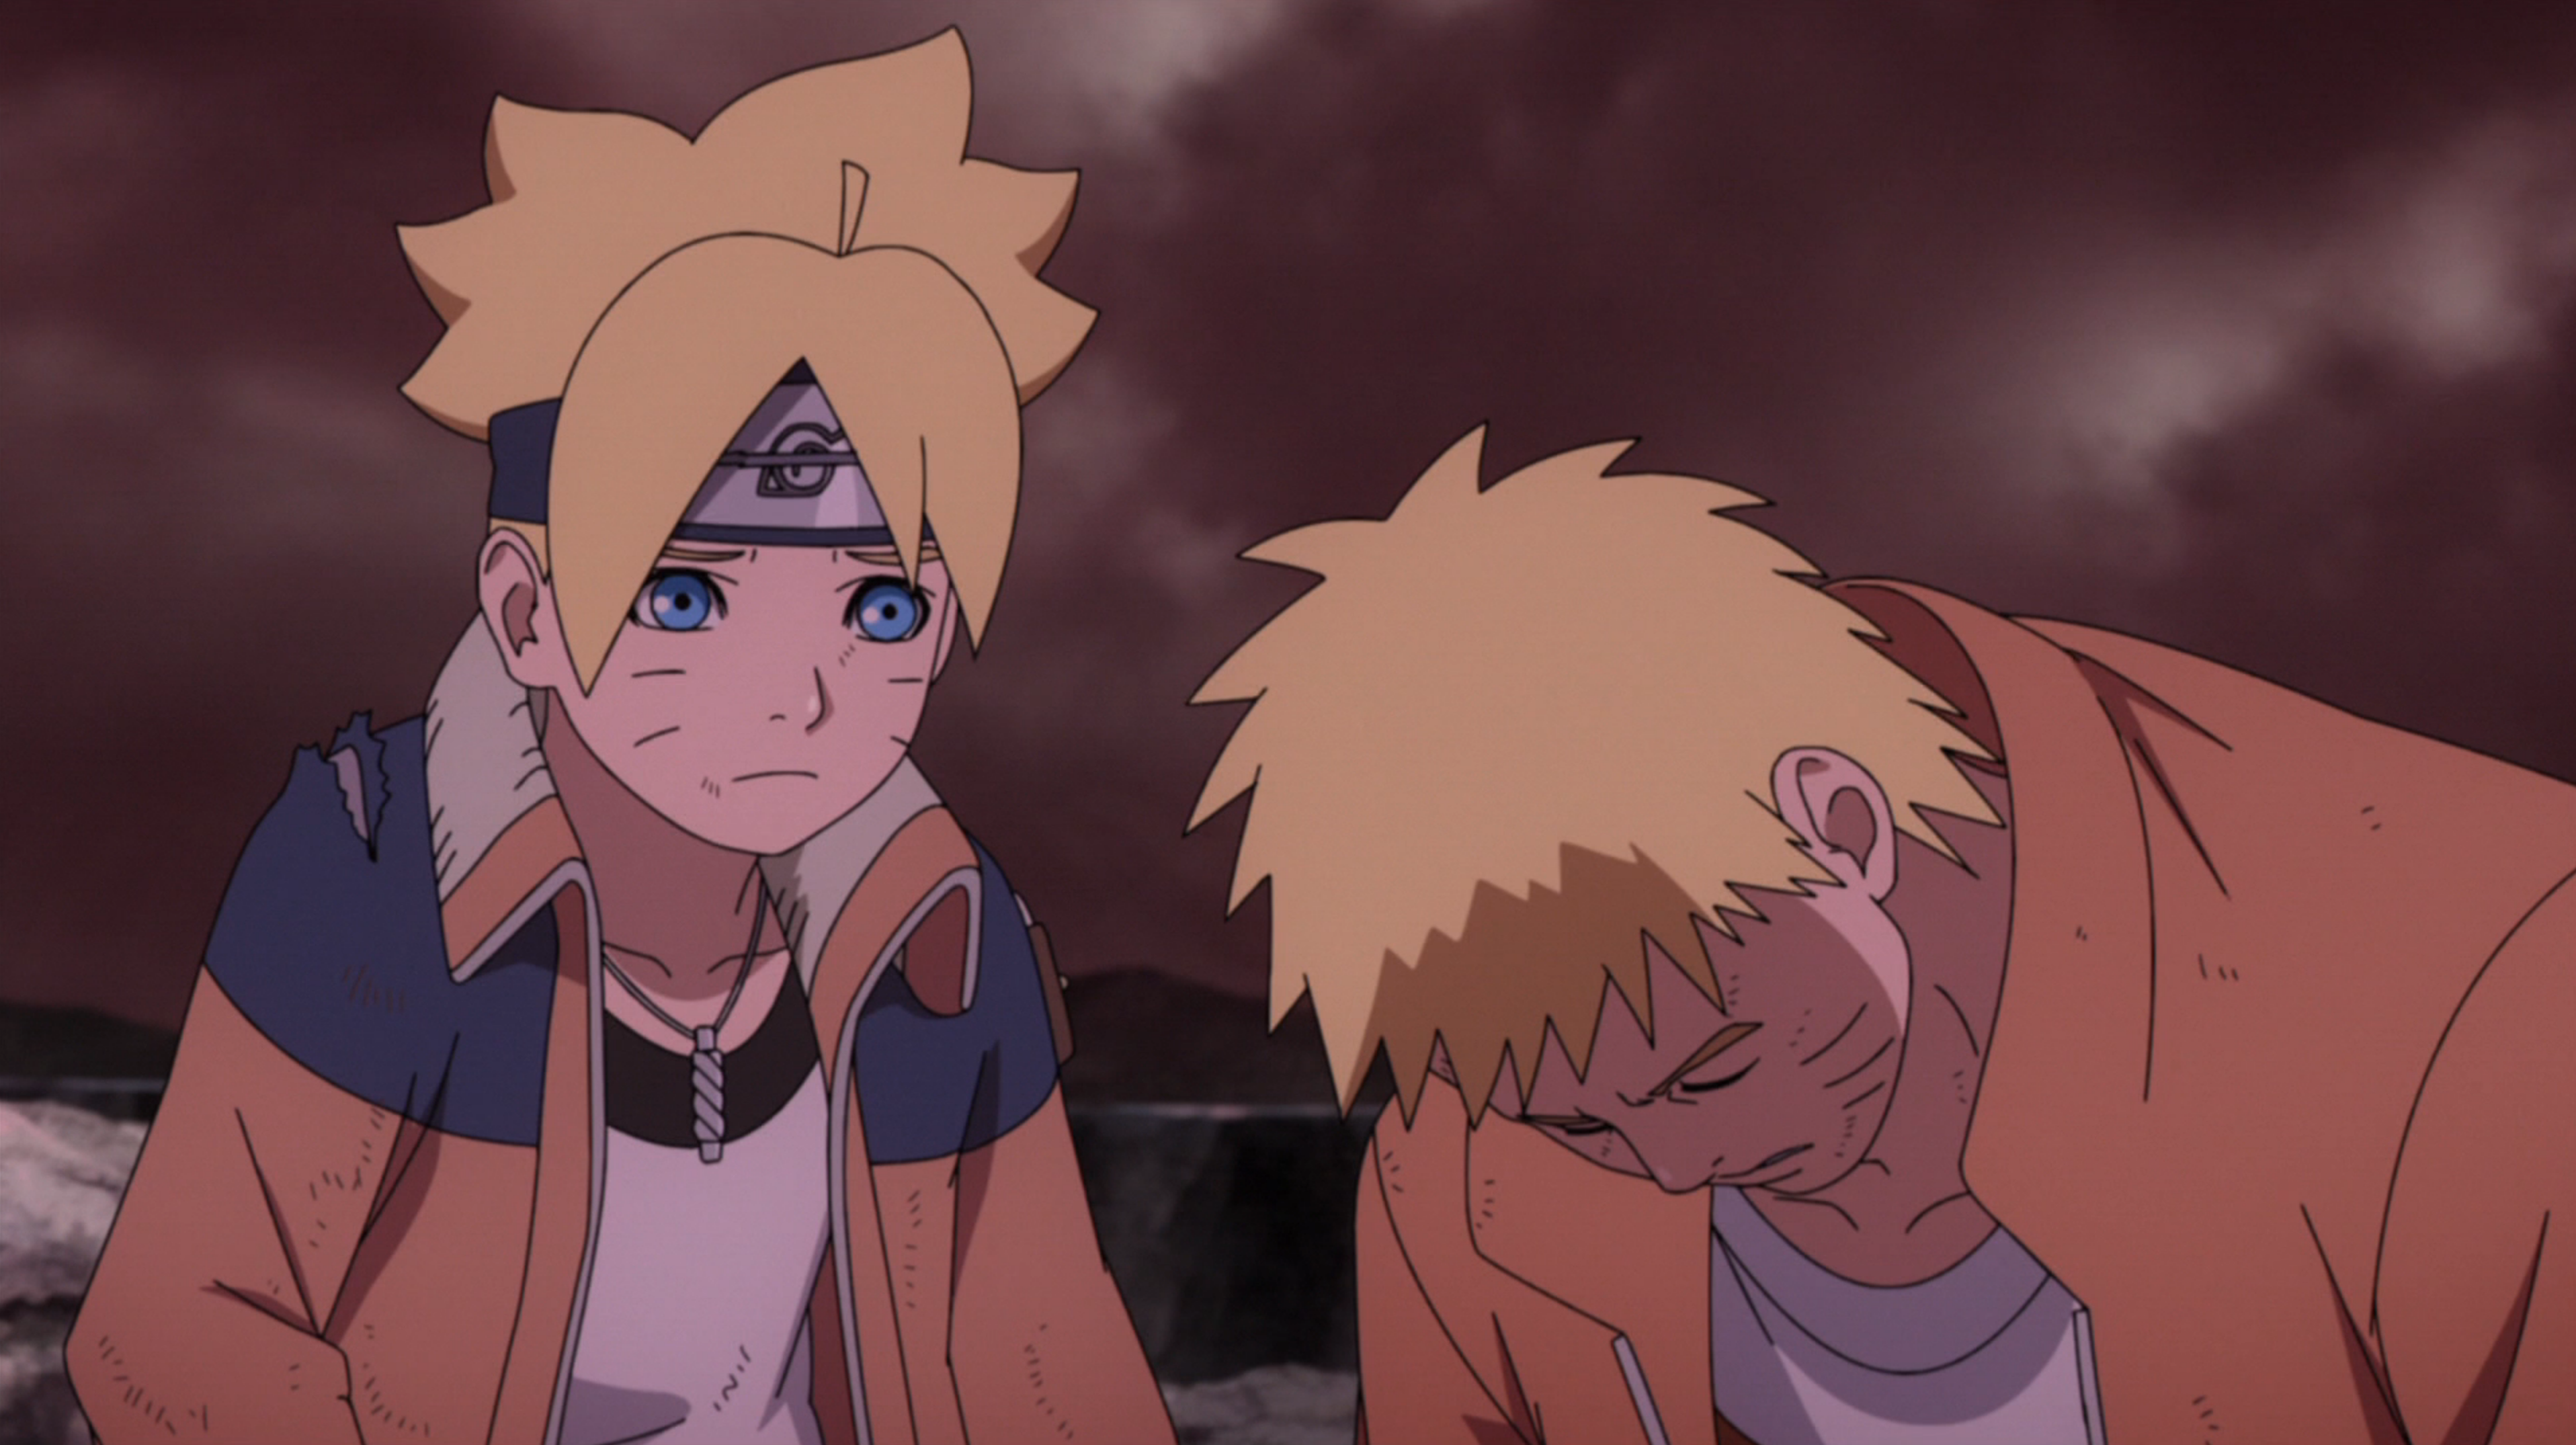 Assistir Boruto: Naruto Next Generations Todos os episódios online.